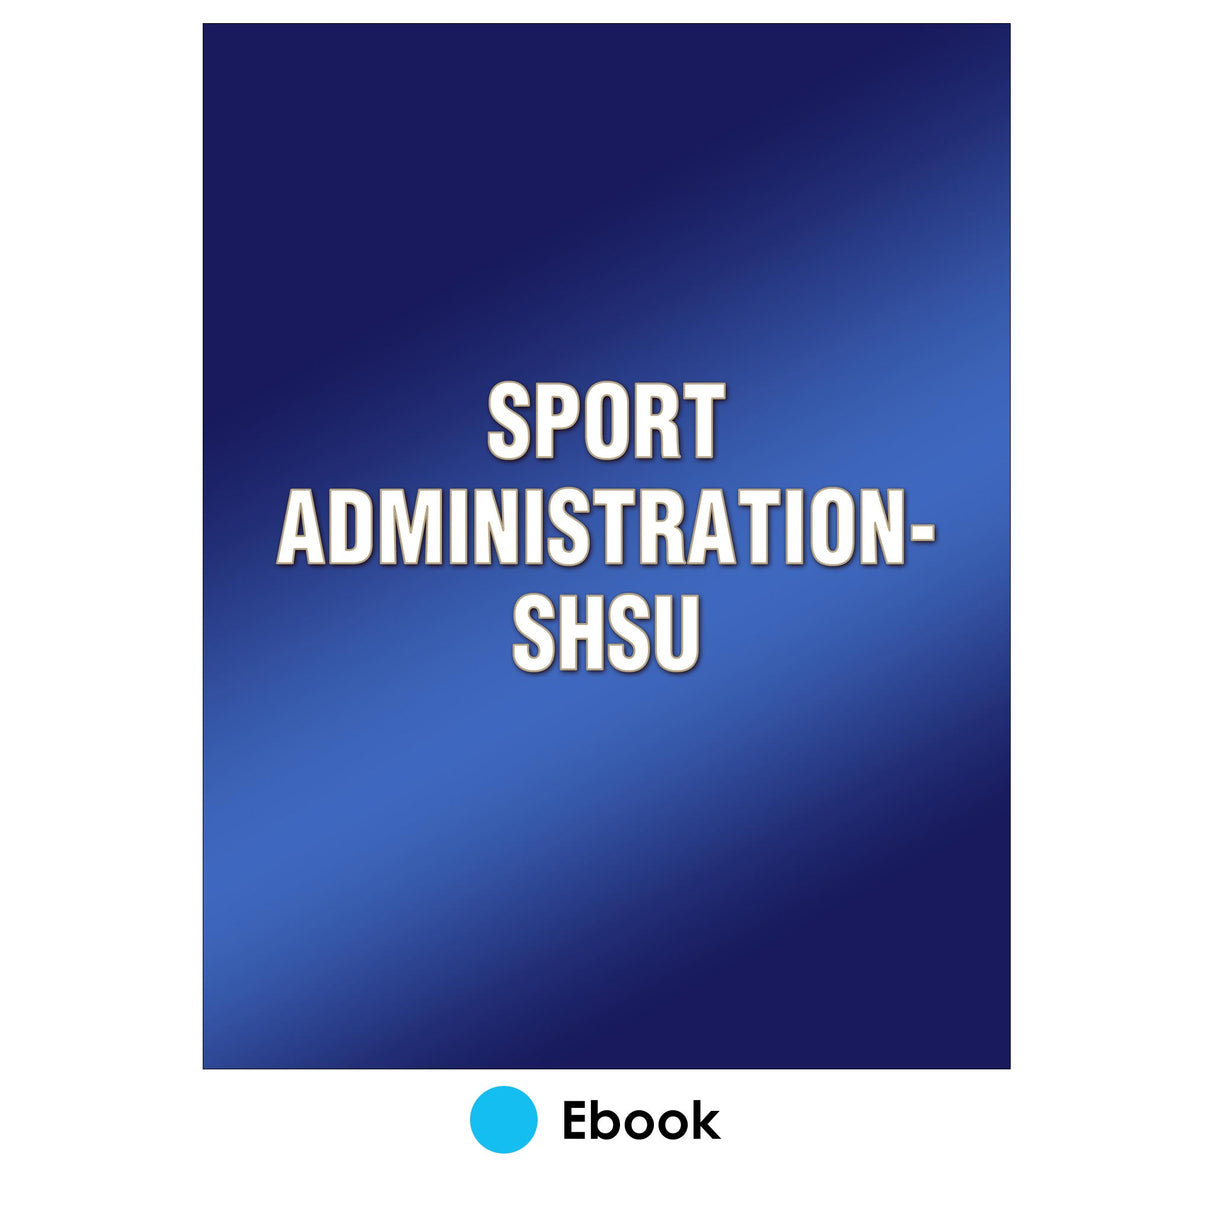 Sport Administration-SHSU